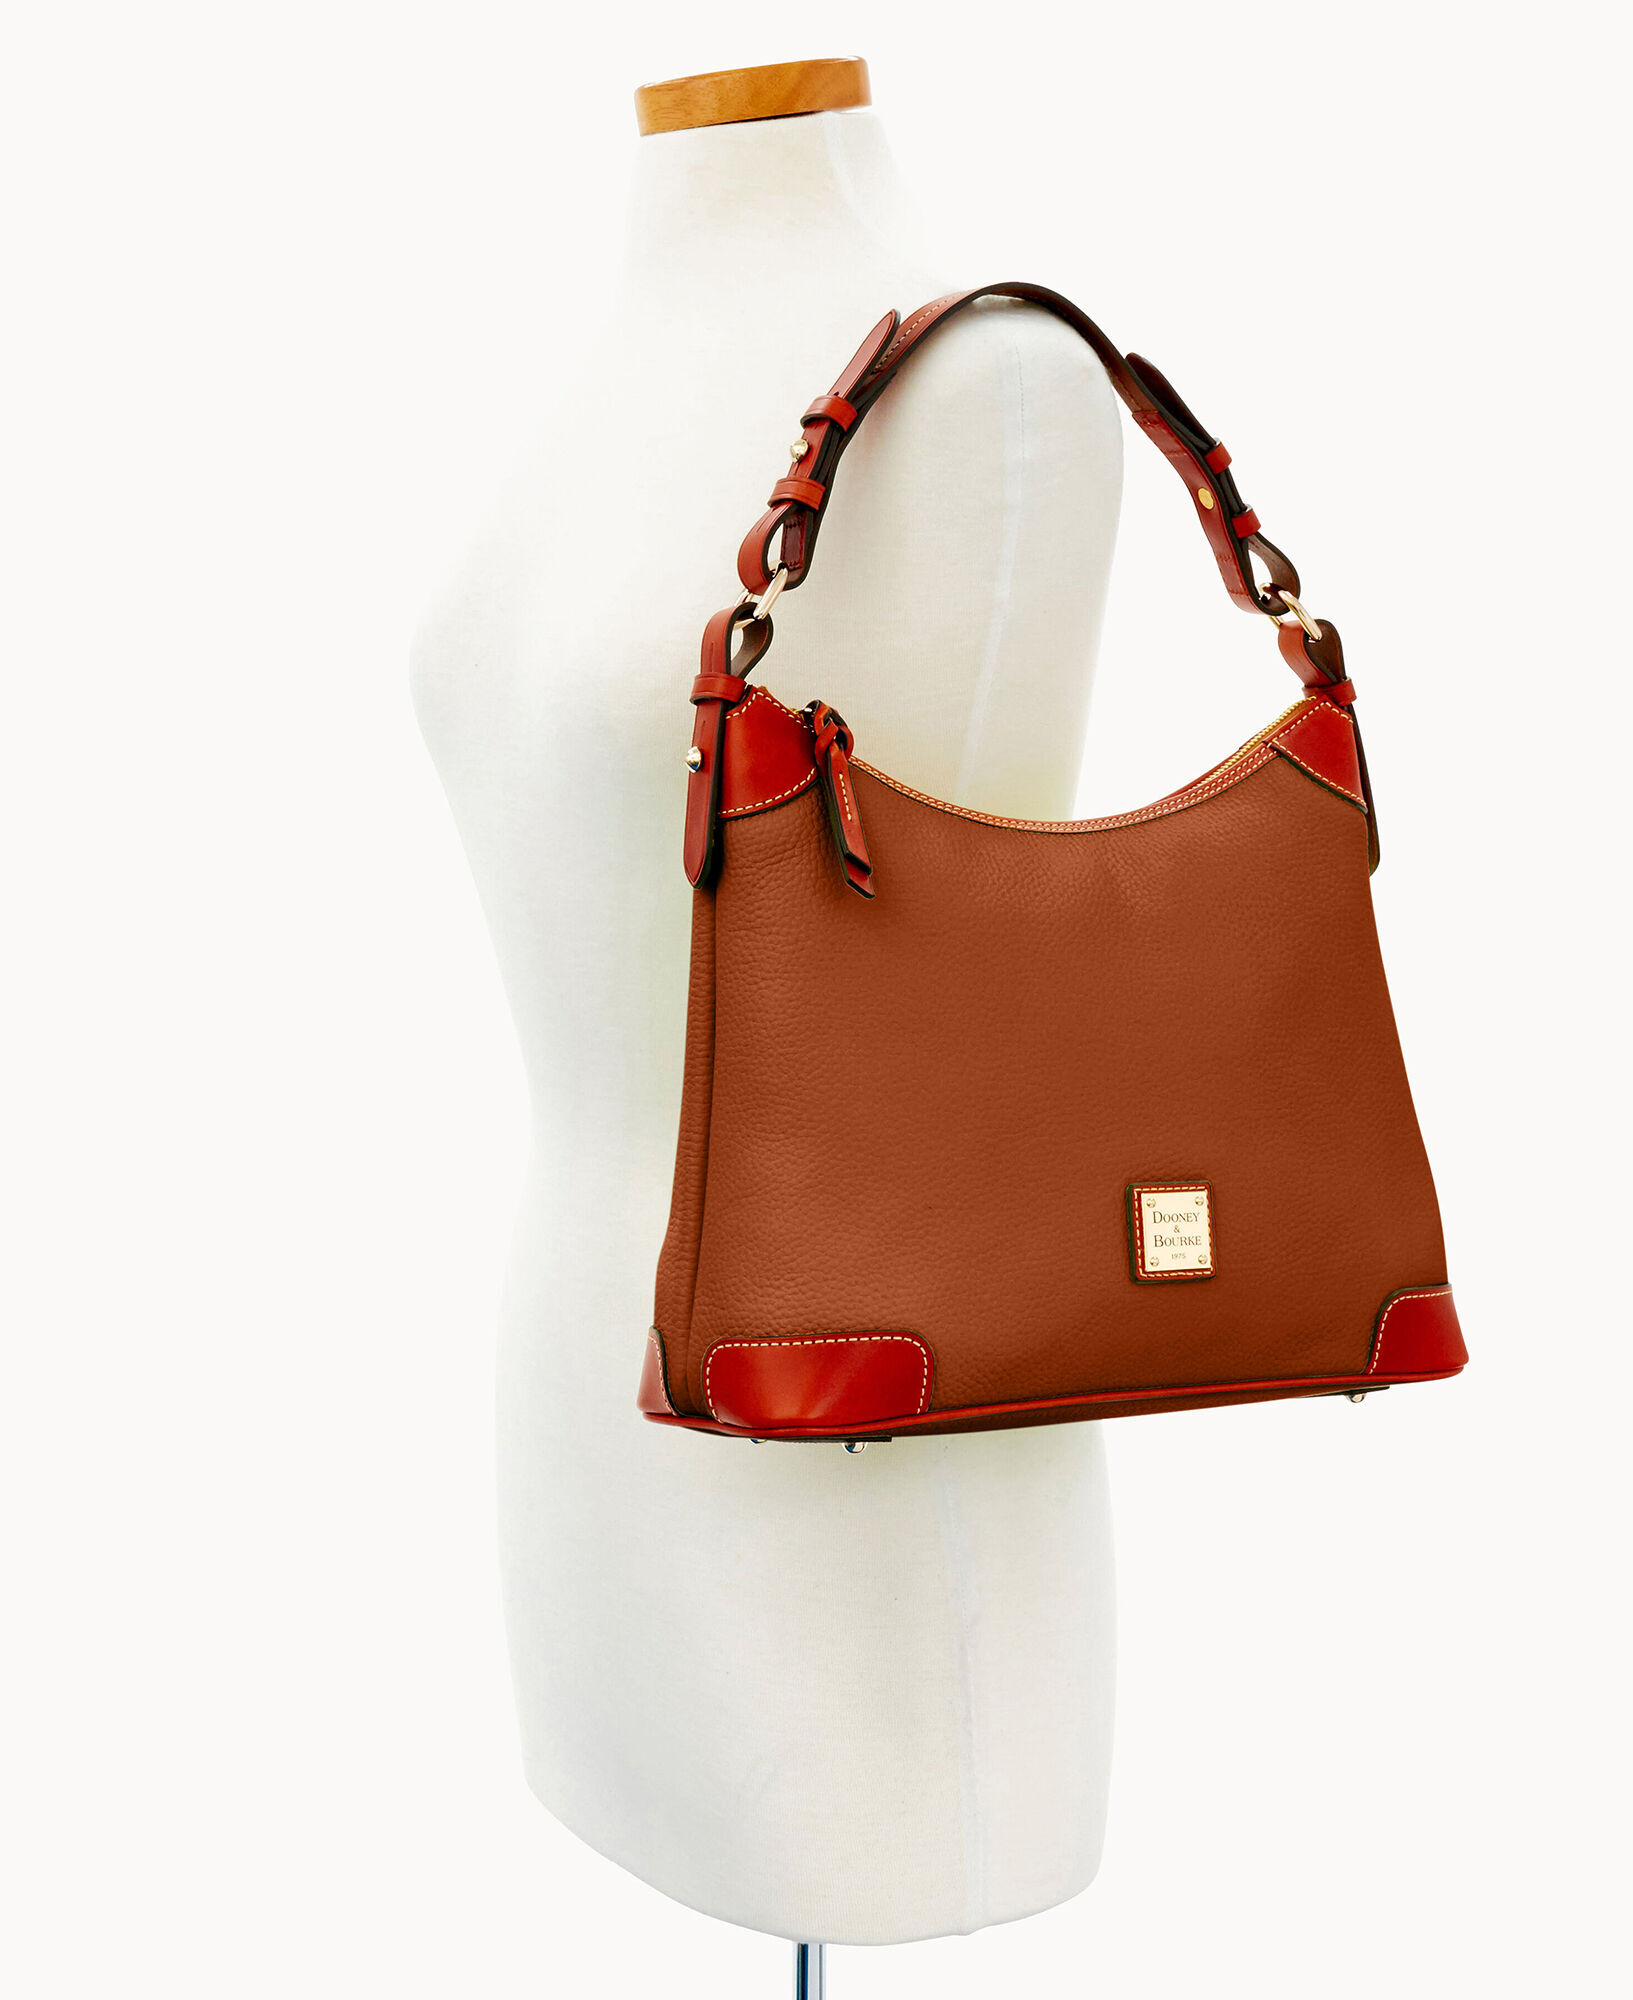 Dooney & Bourke Handbag, Saffiano Hobo Shoulder Bag